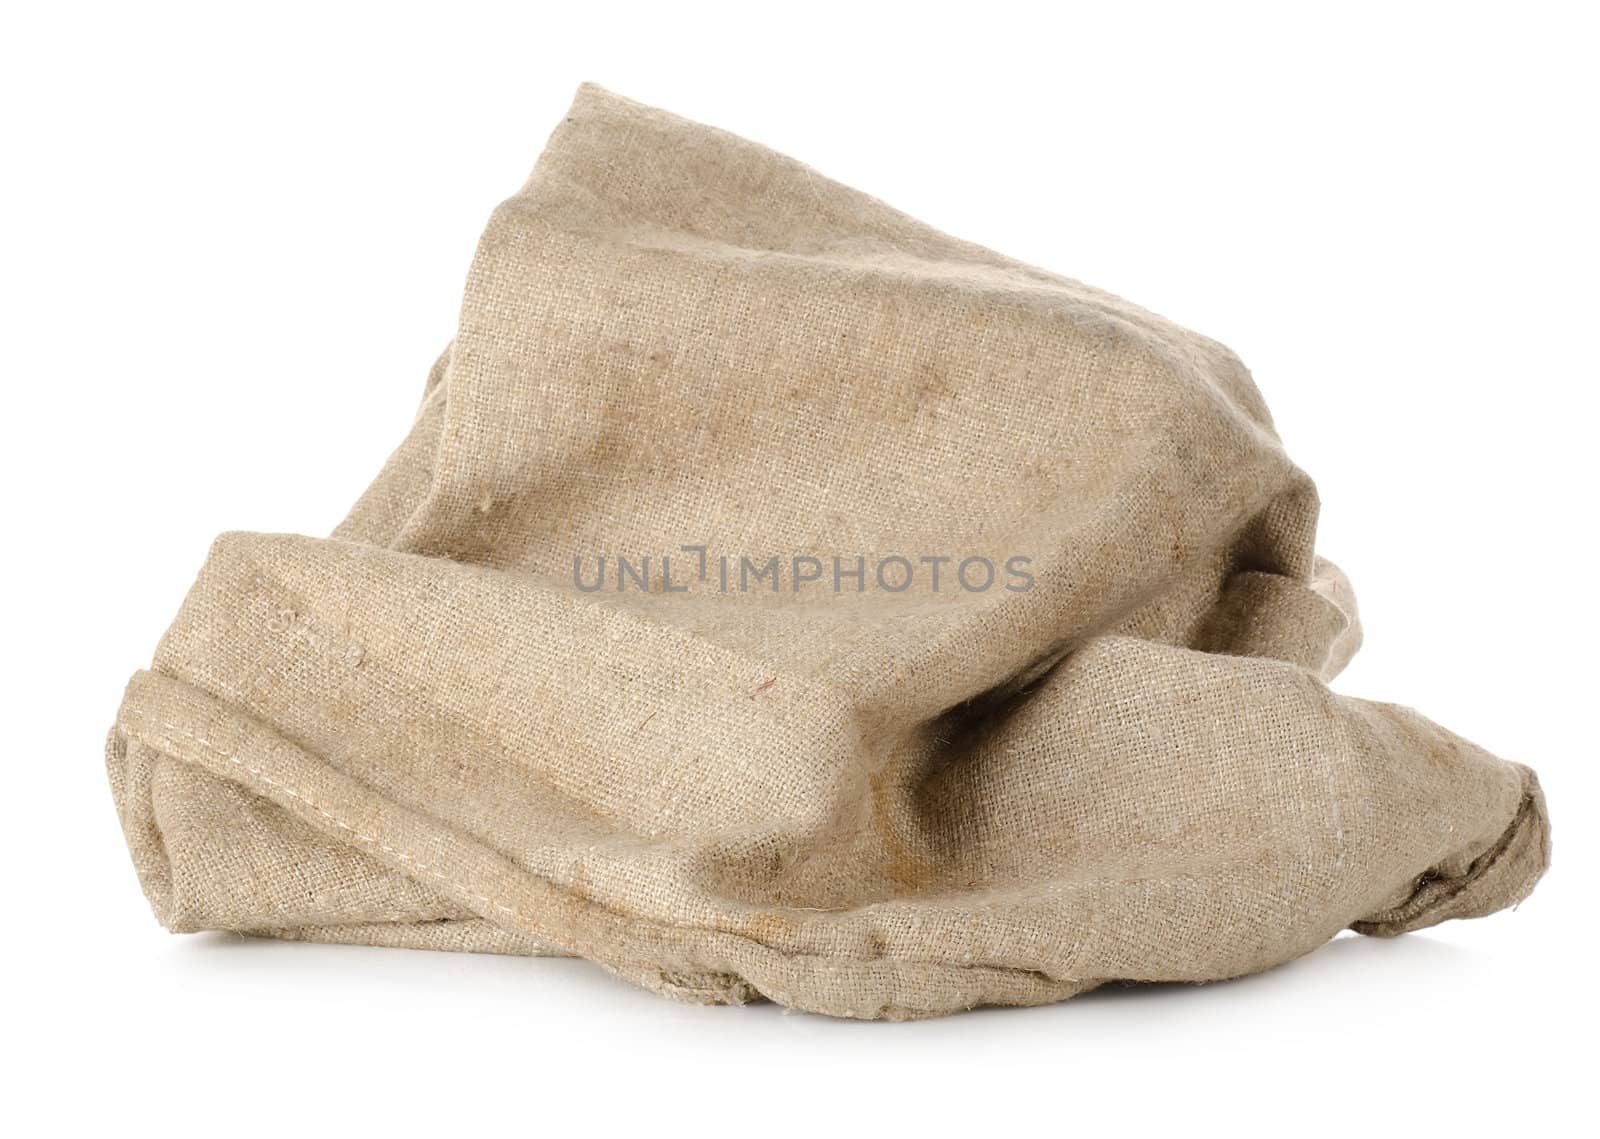 Burlap sack isolated on a white background